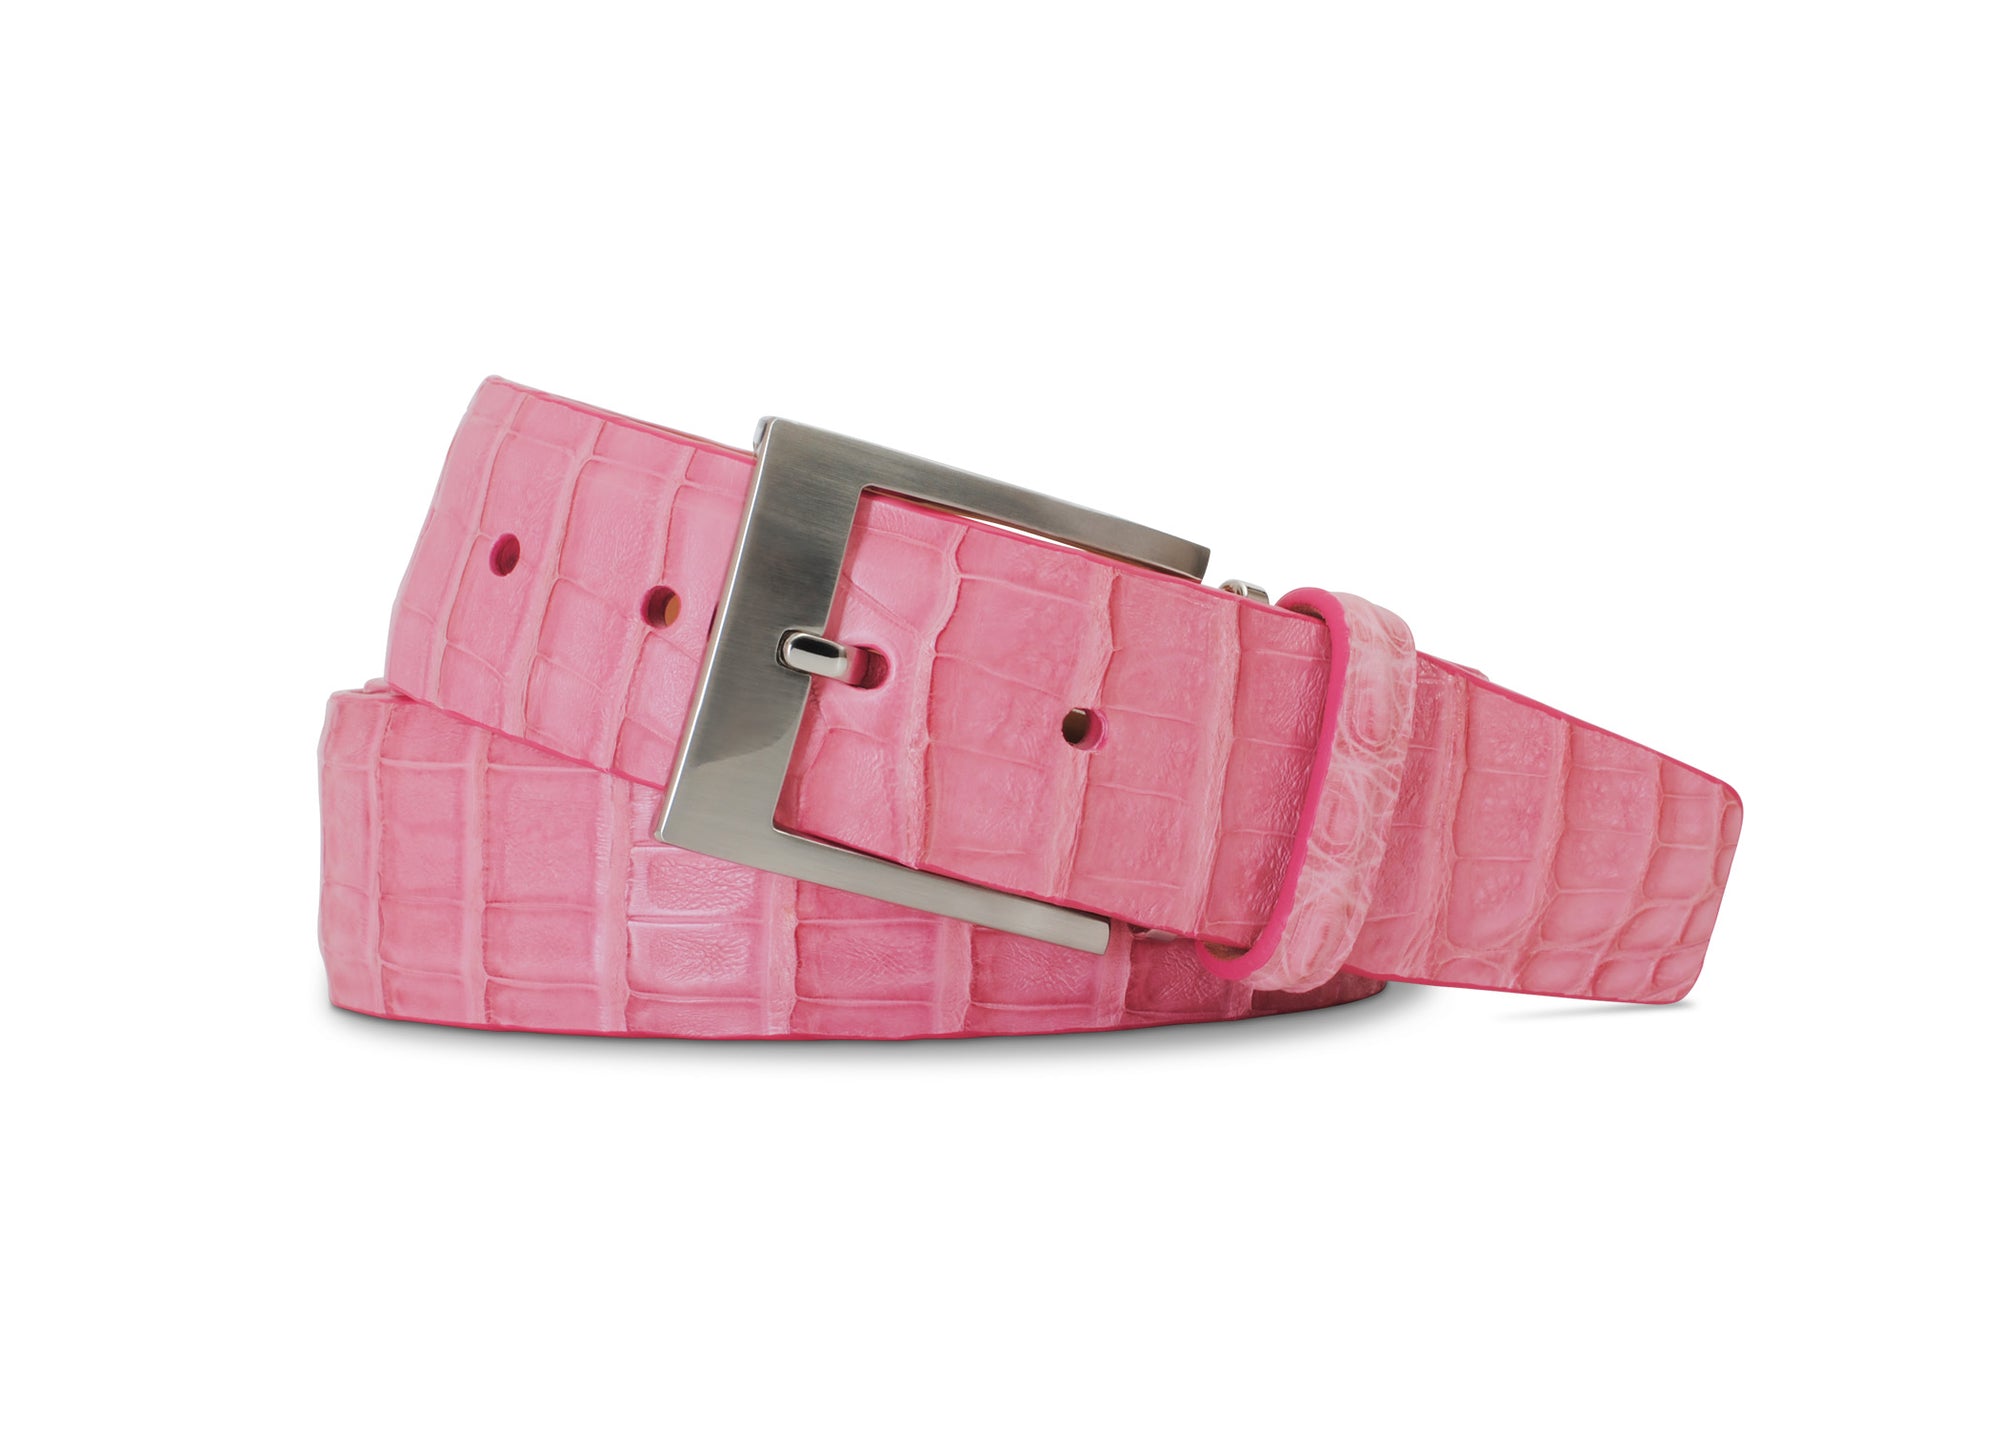 Caiman Crocodile Belt in Pink by Brookes & Hyde